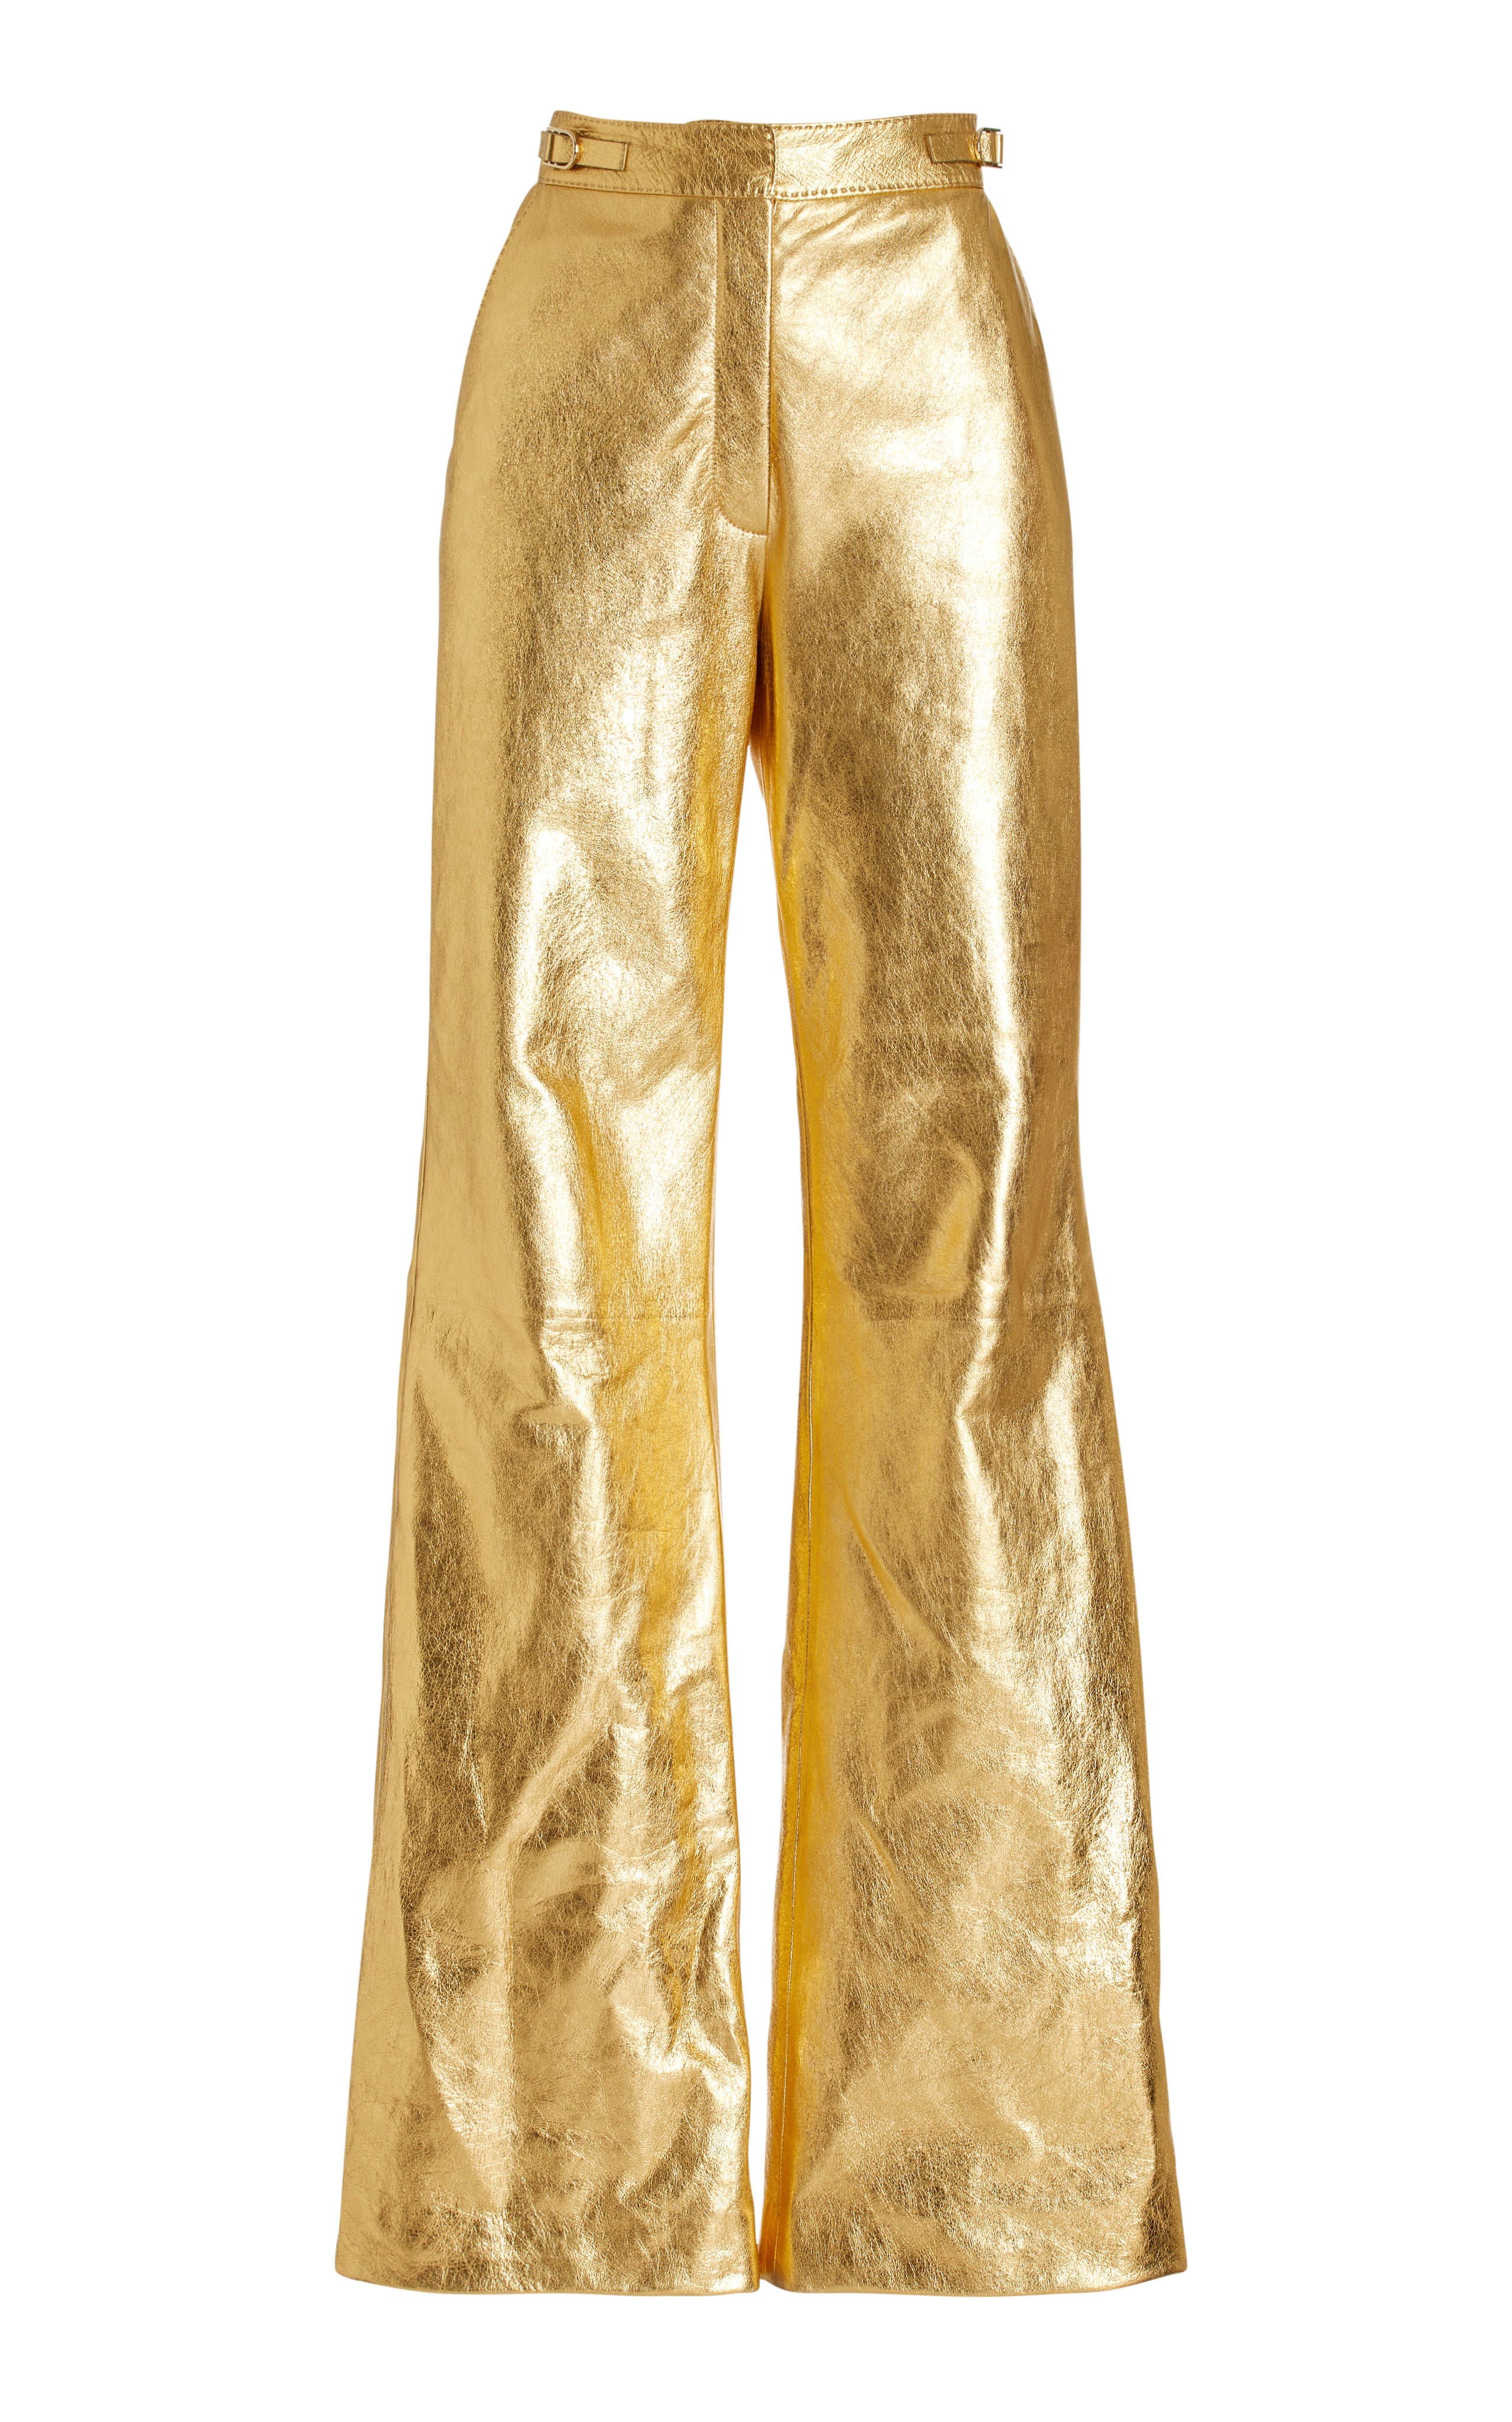 Vesta Pant in Gold Leather - 1